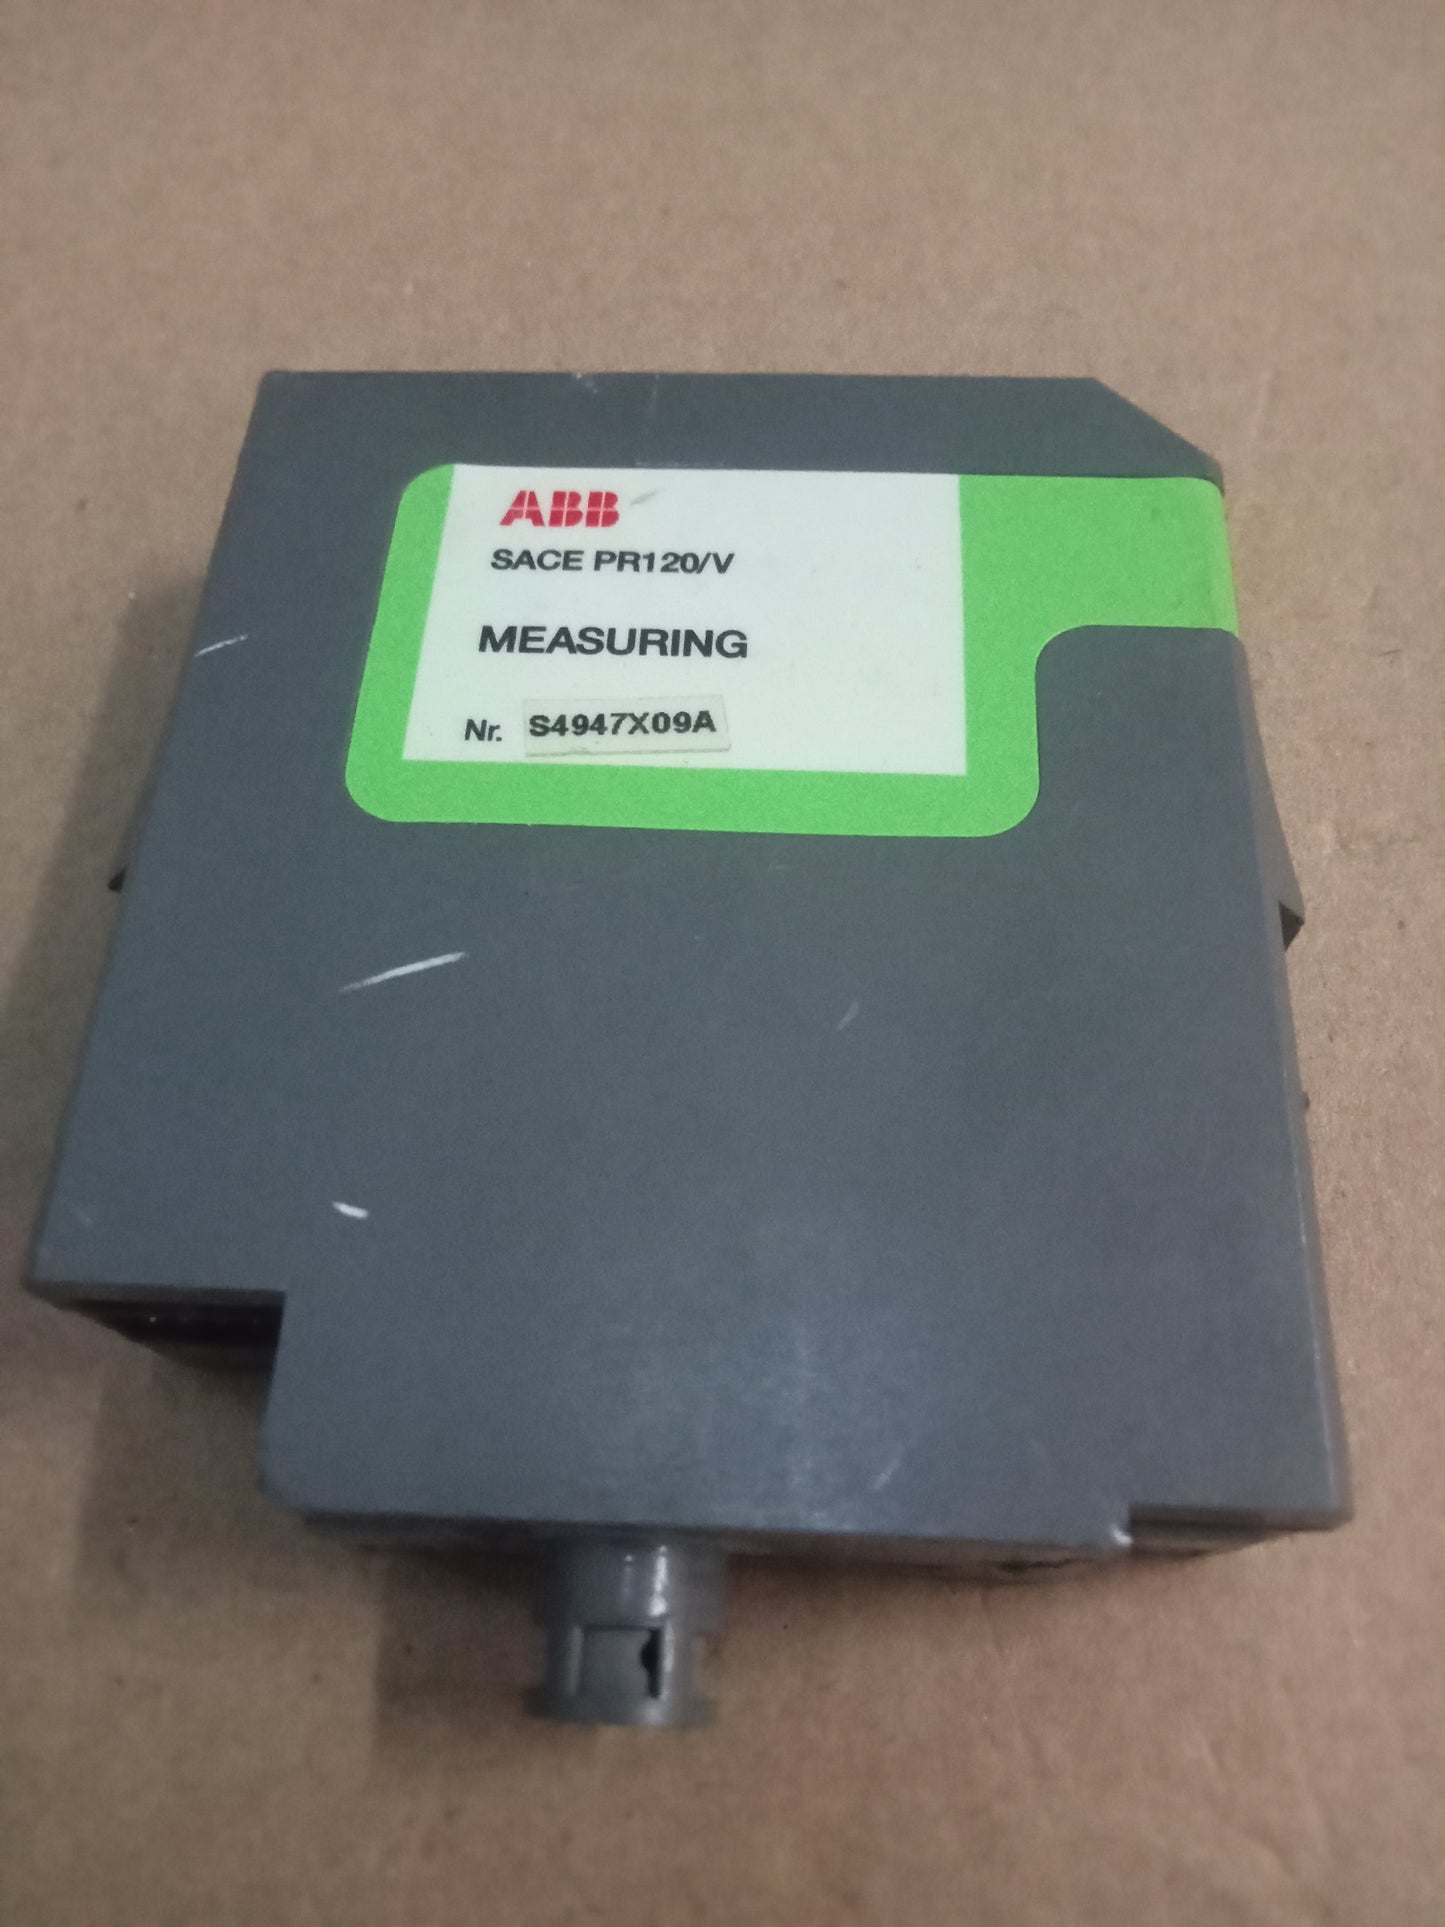 ABB SACE PR120/V MEASURING MODULE